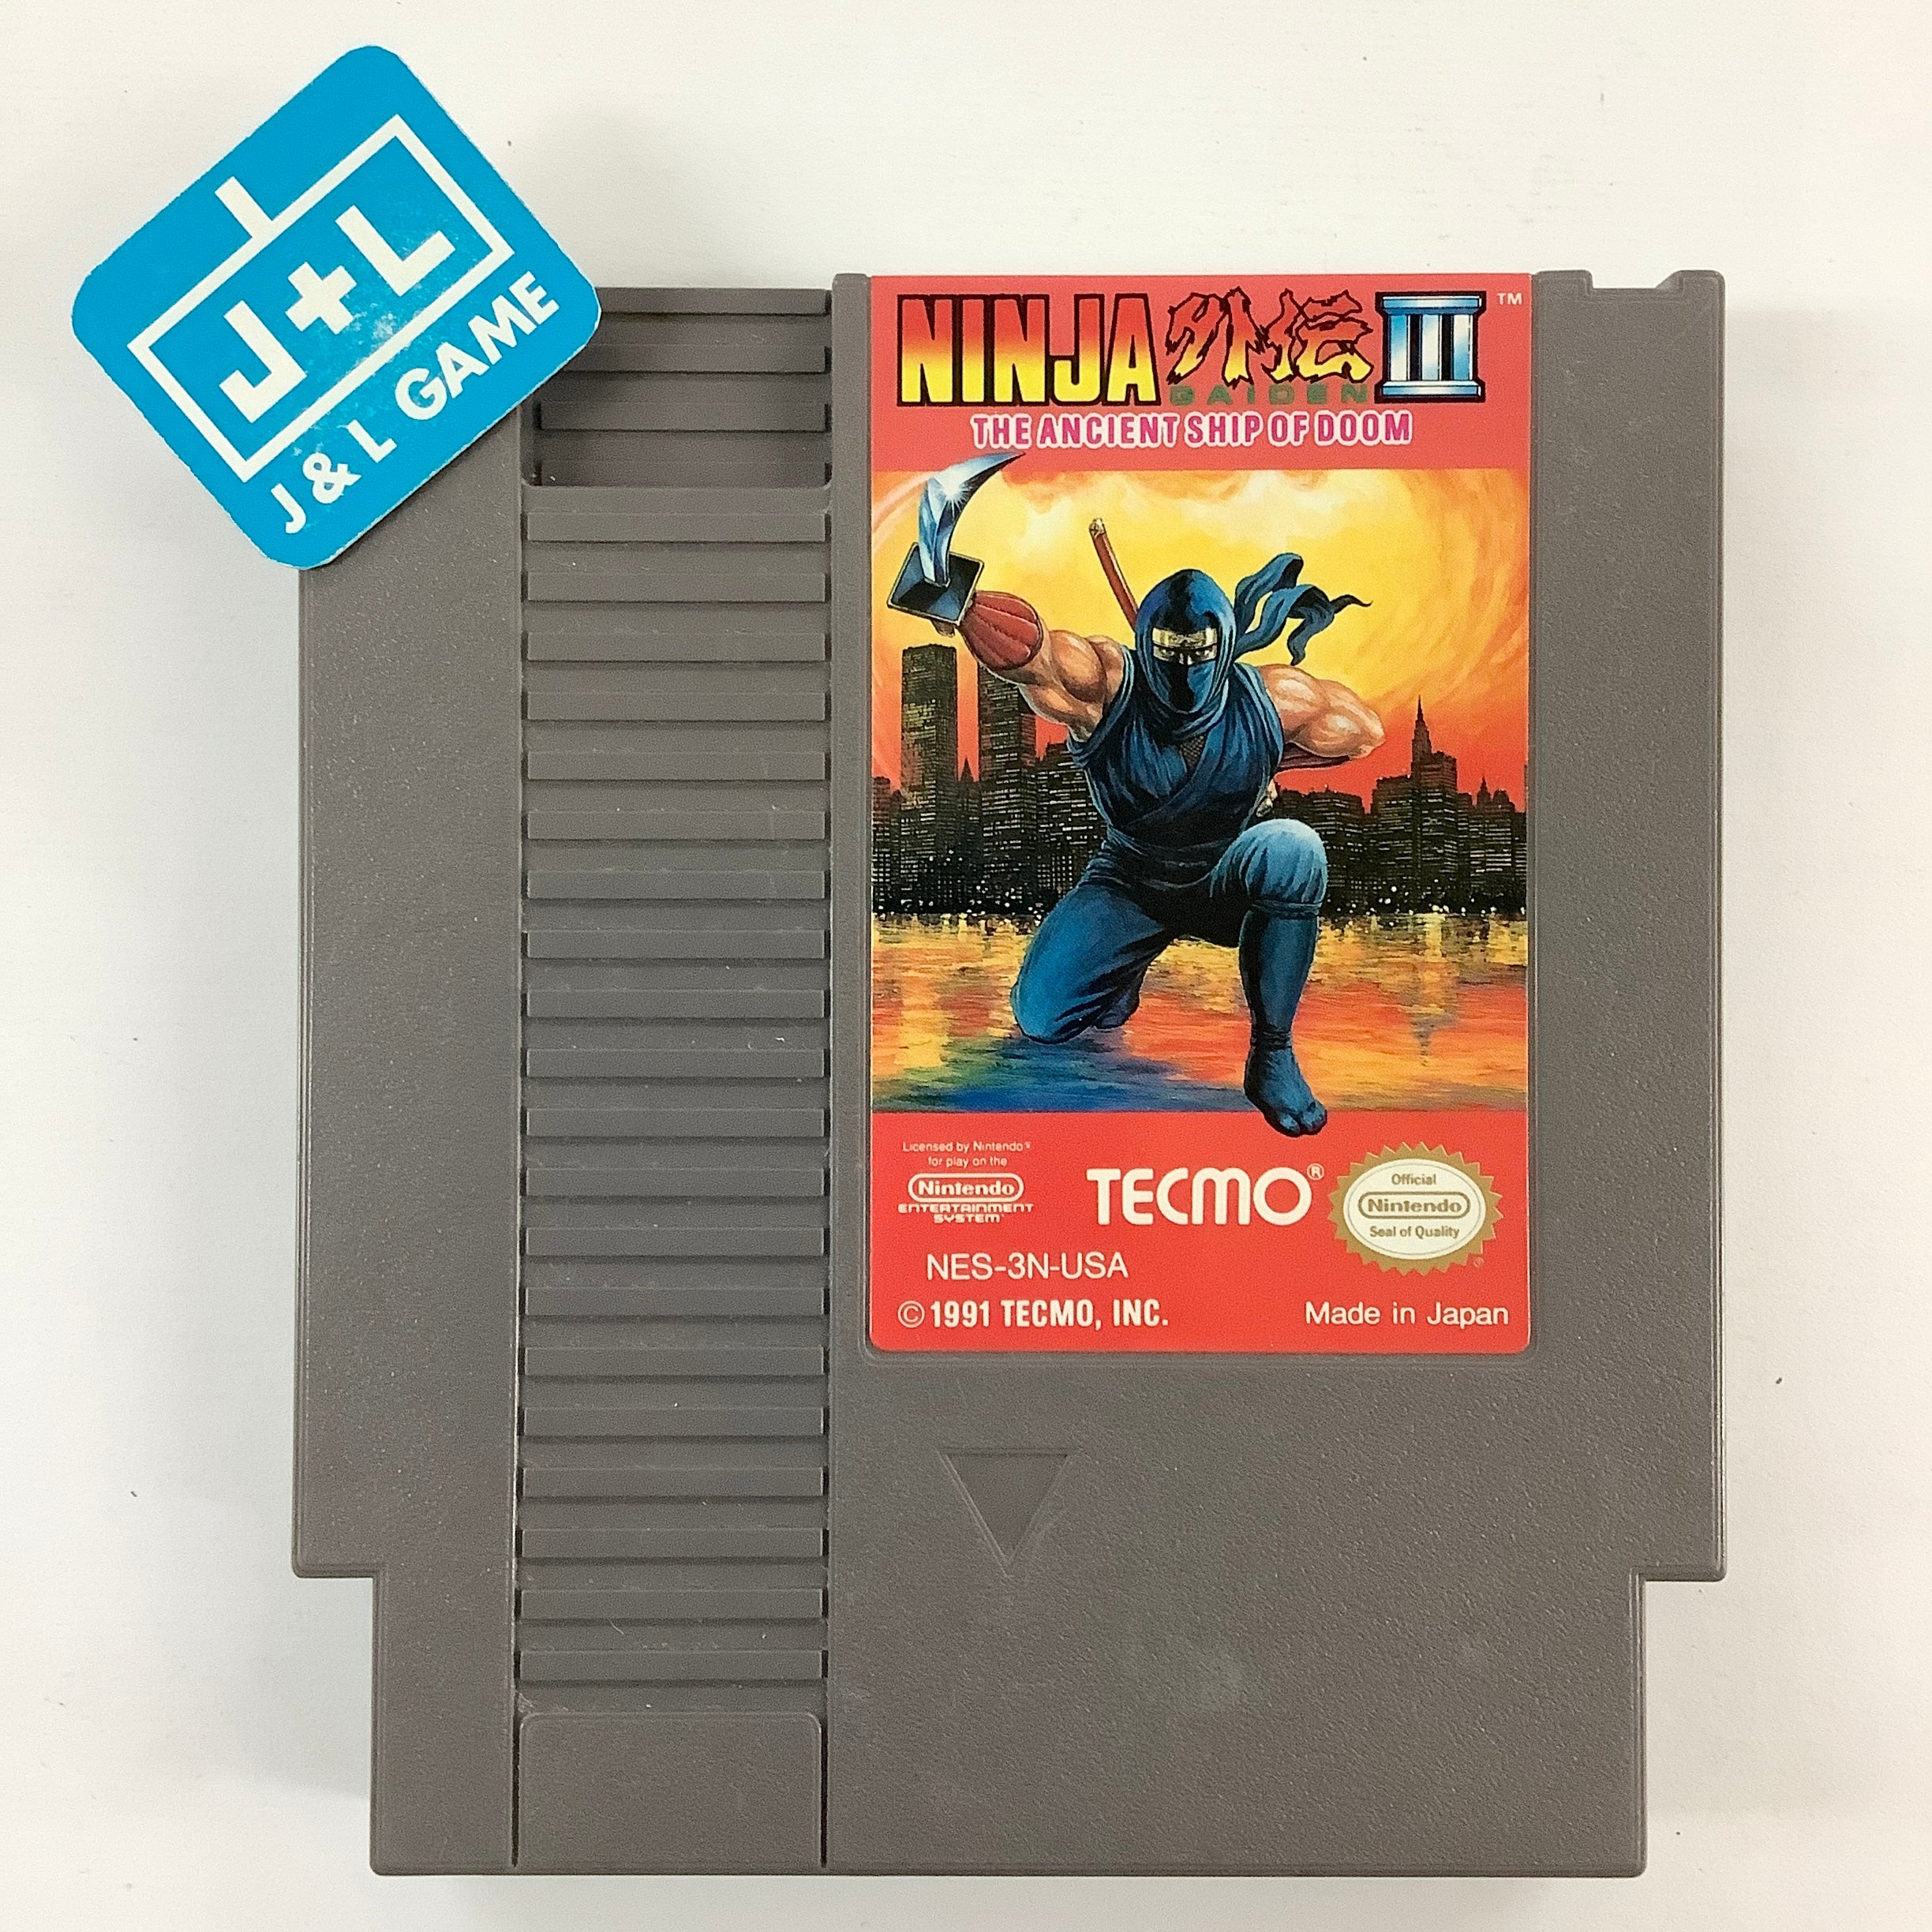 Ninja Gaiden III: The Ancient Ship of Doom - (NES) Nintendo Entertainment System [Pre-Owned] Video Games Tecmo   